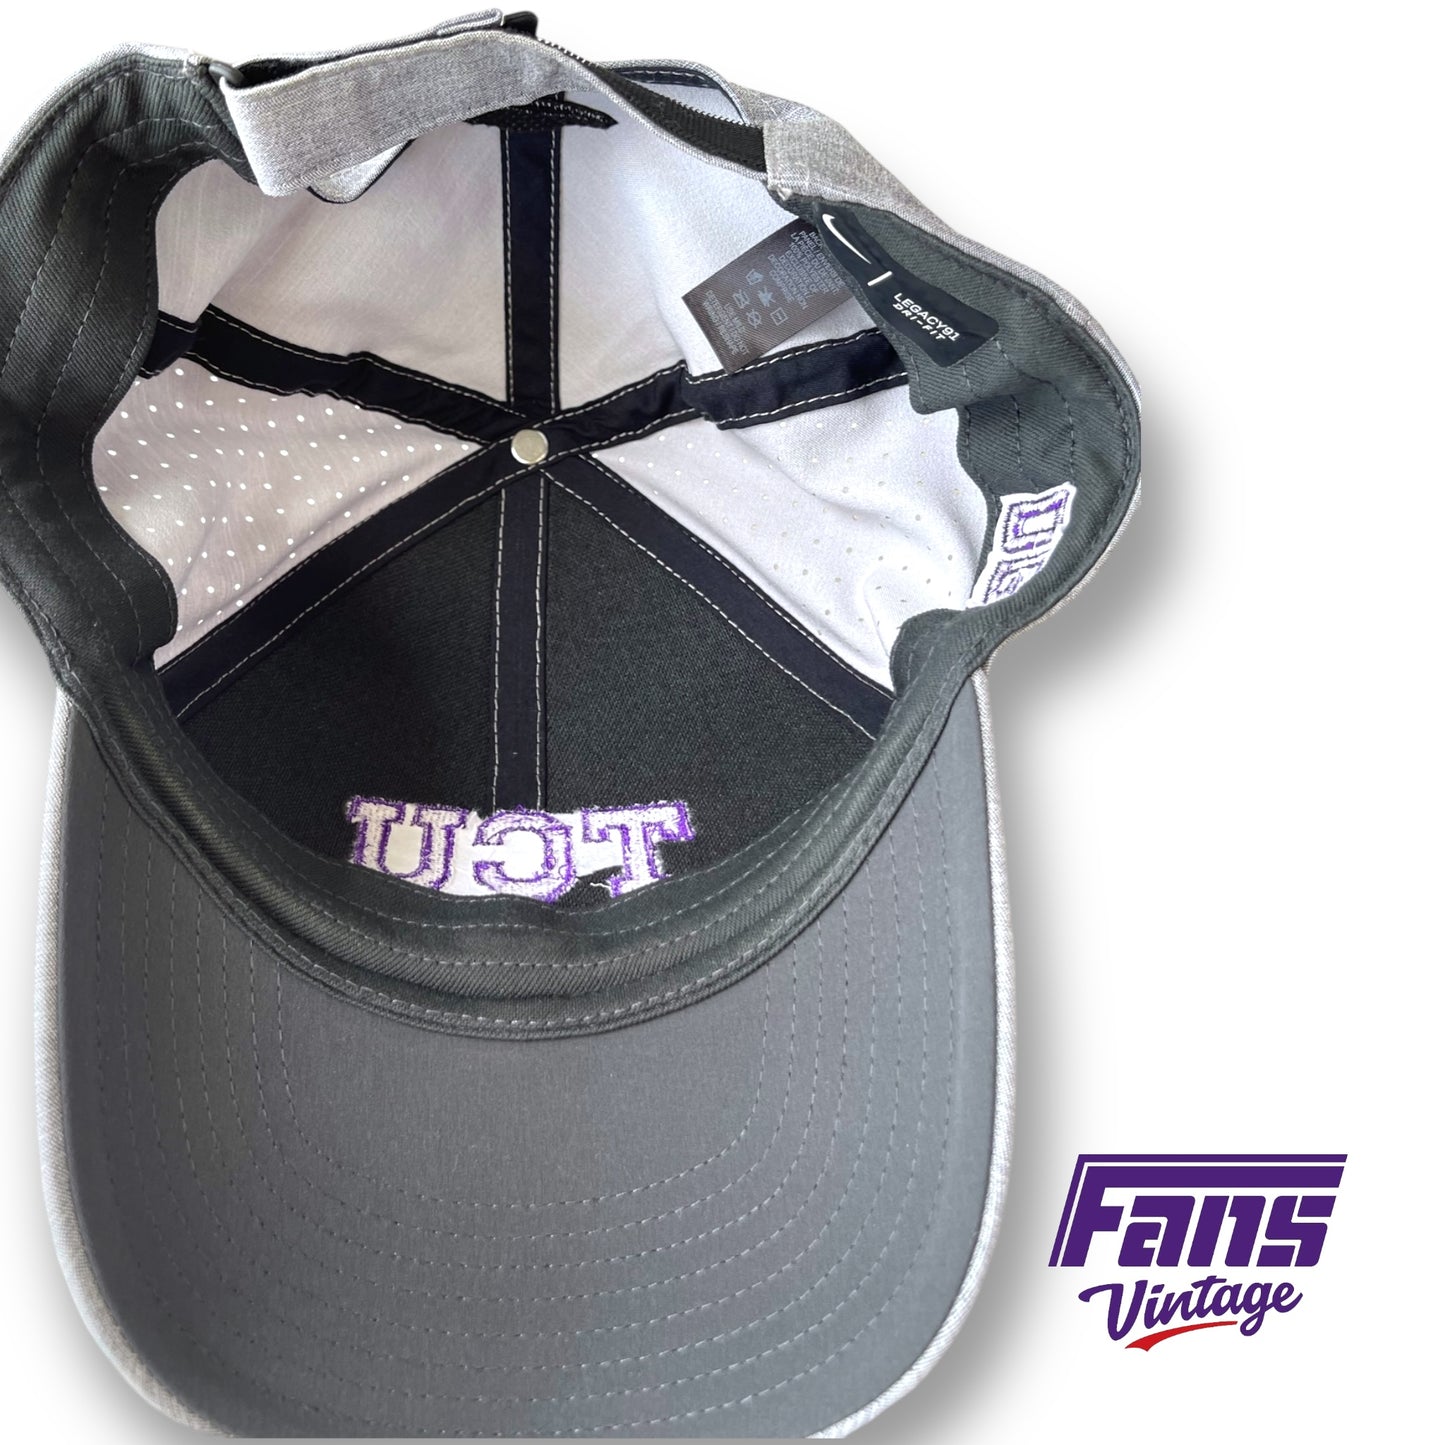 TCU Football Team Issue Coach’s Sideline Nike Drifit Hat